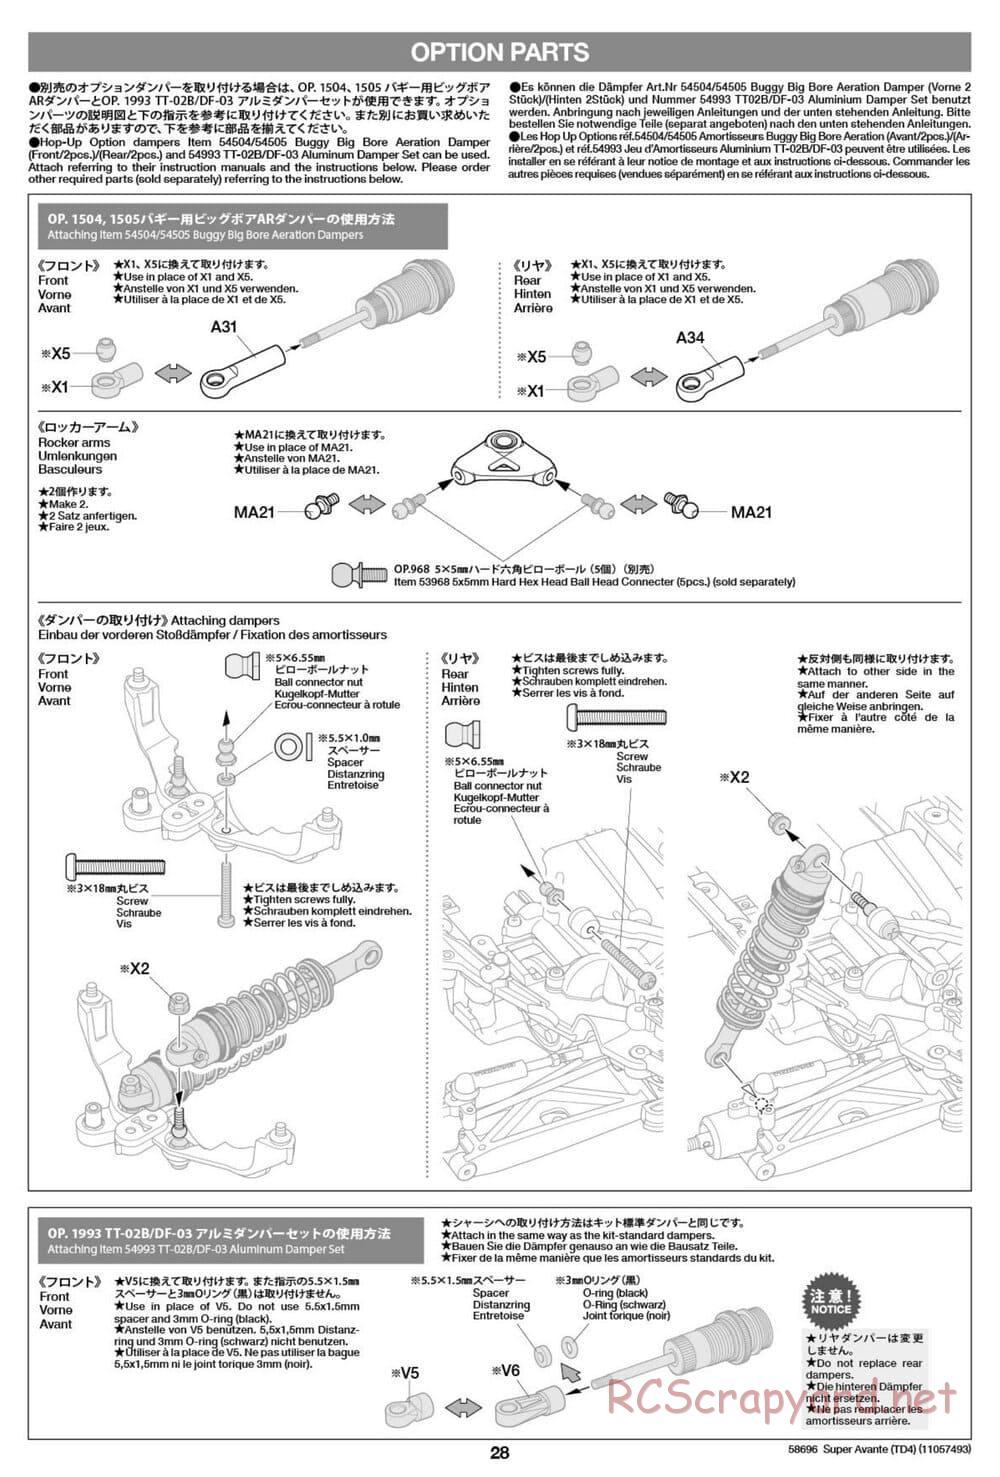 Tamiya - Super Avante - TD4 Chassis - Manual - Page 29